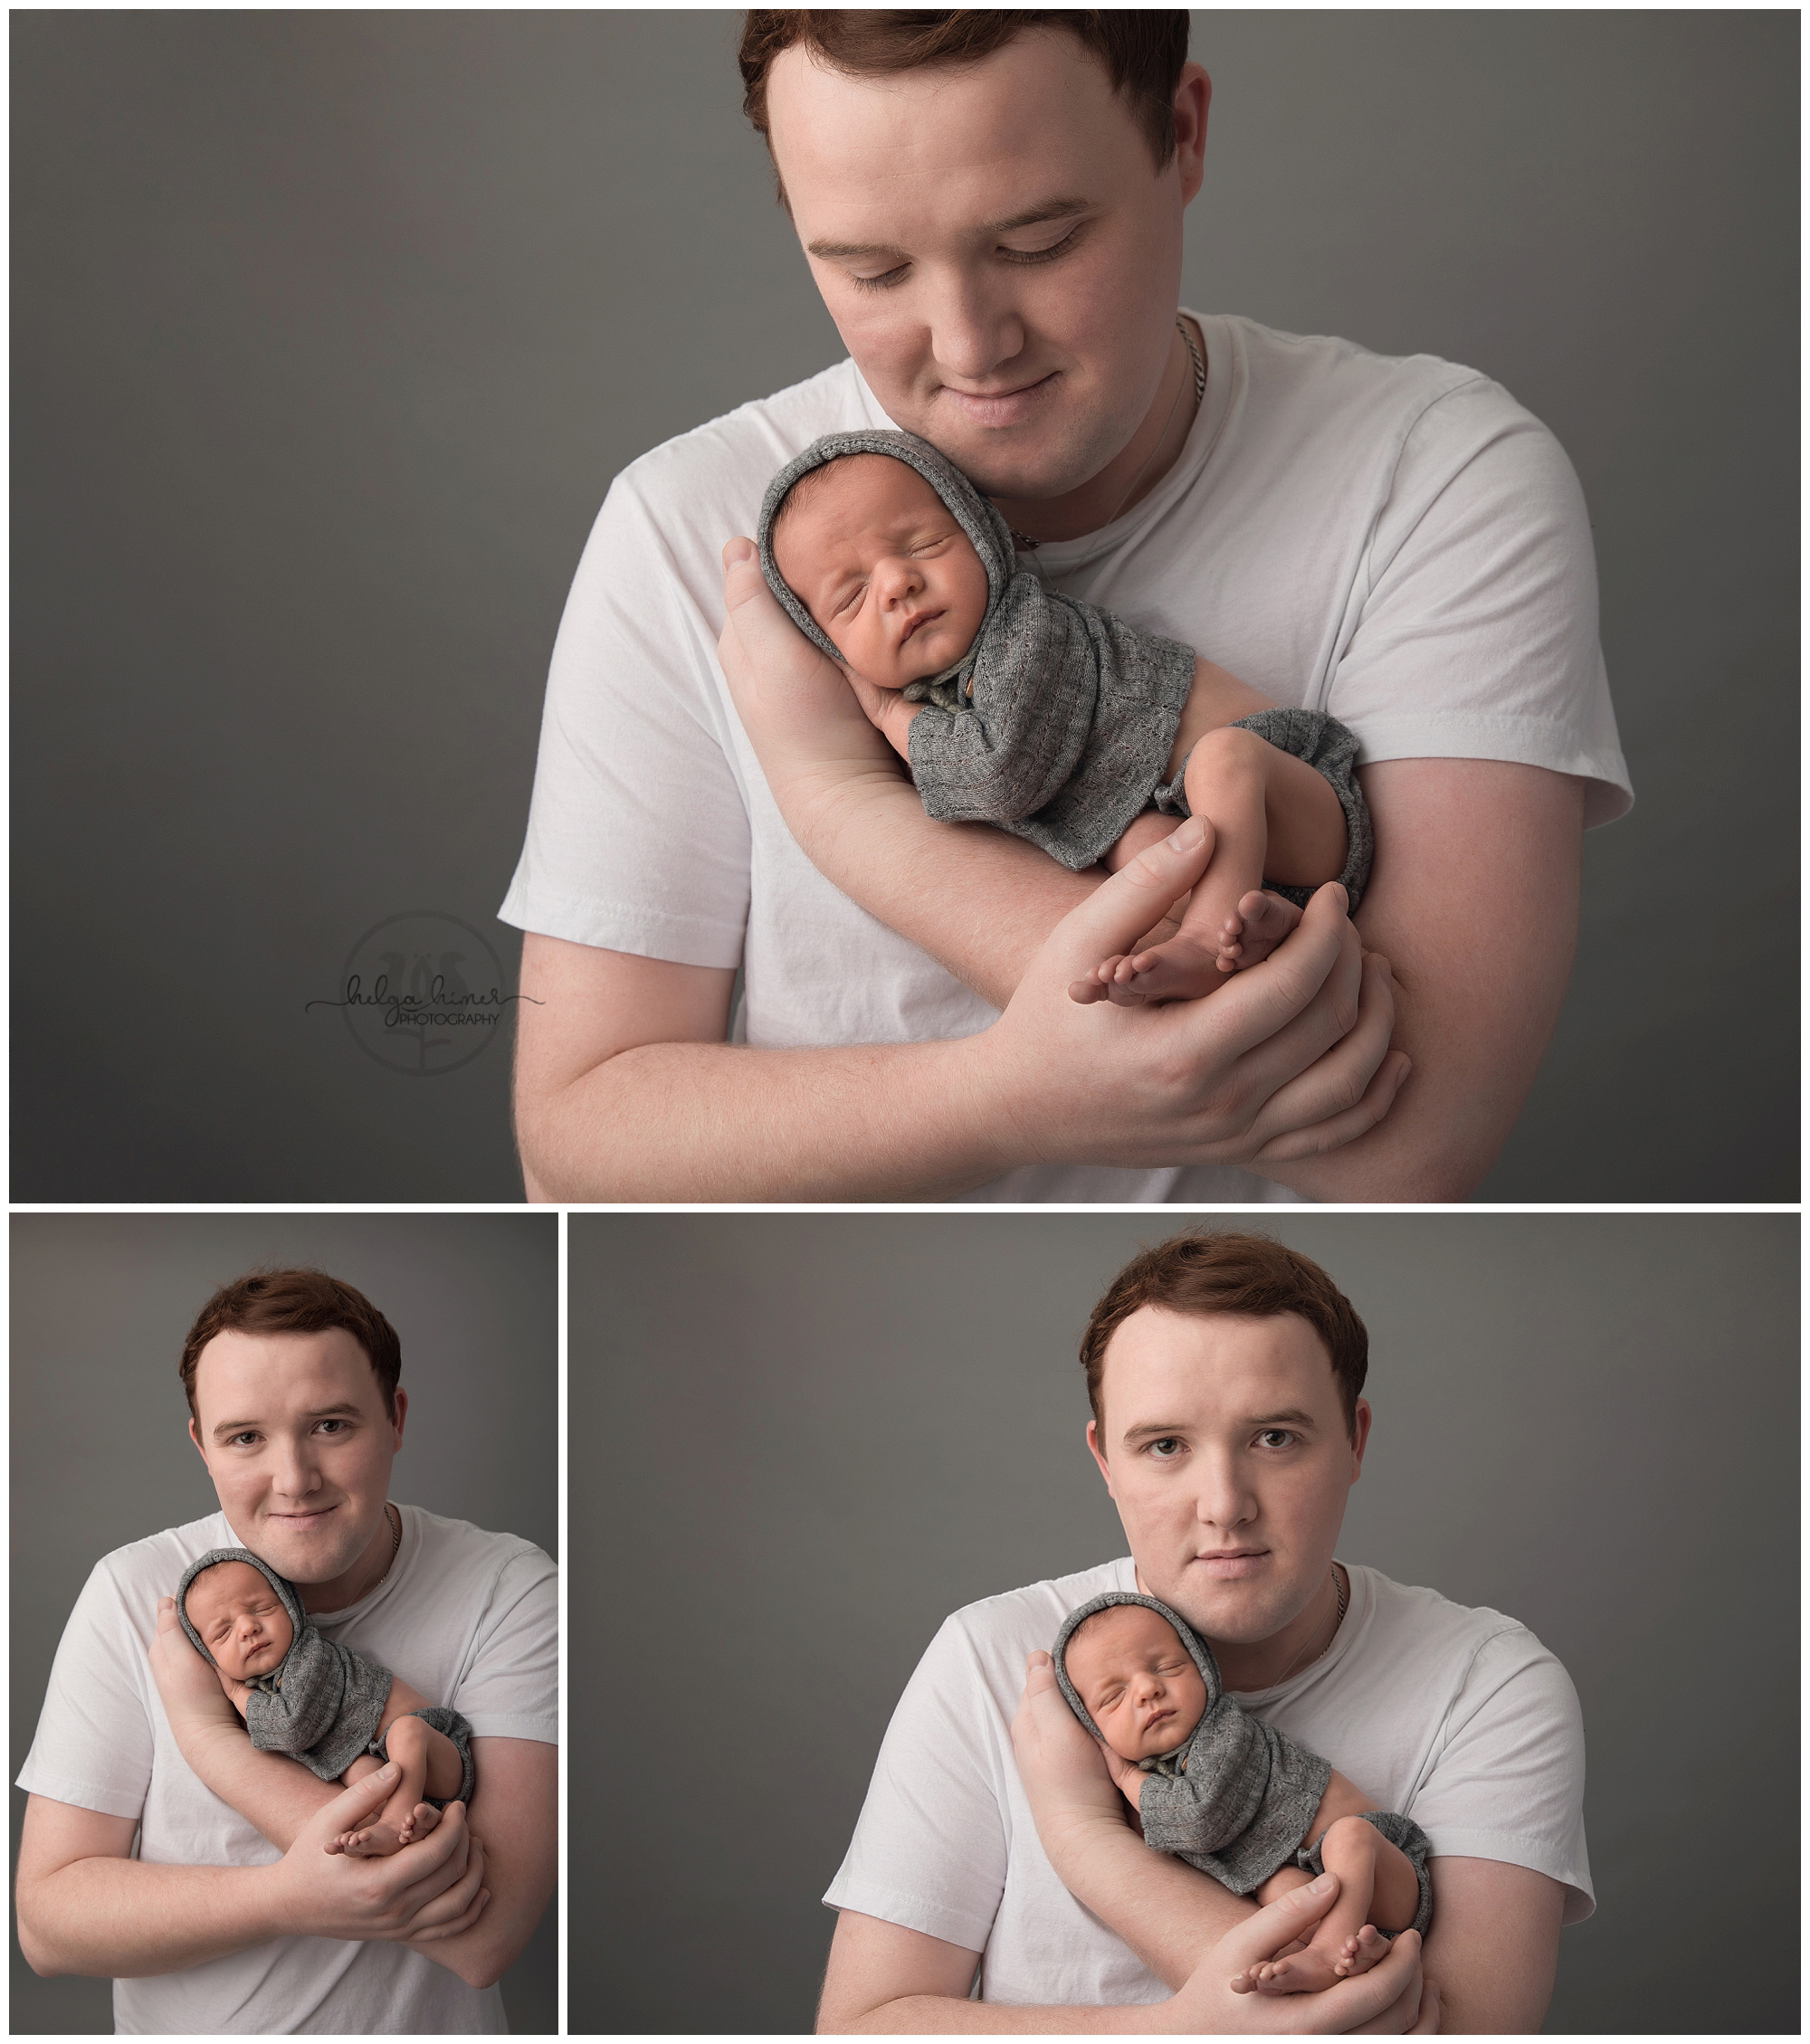 newborn-photography-ezra-helga-himer-photographer-sudbury-white-shirt-dad-with-baby